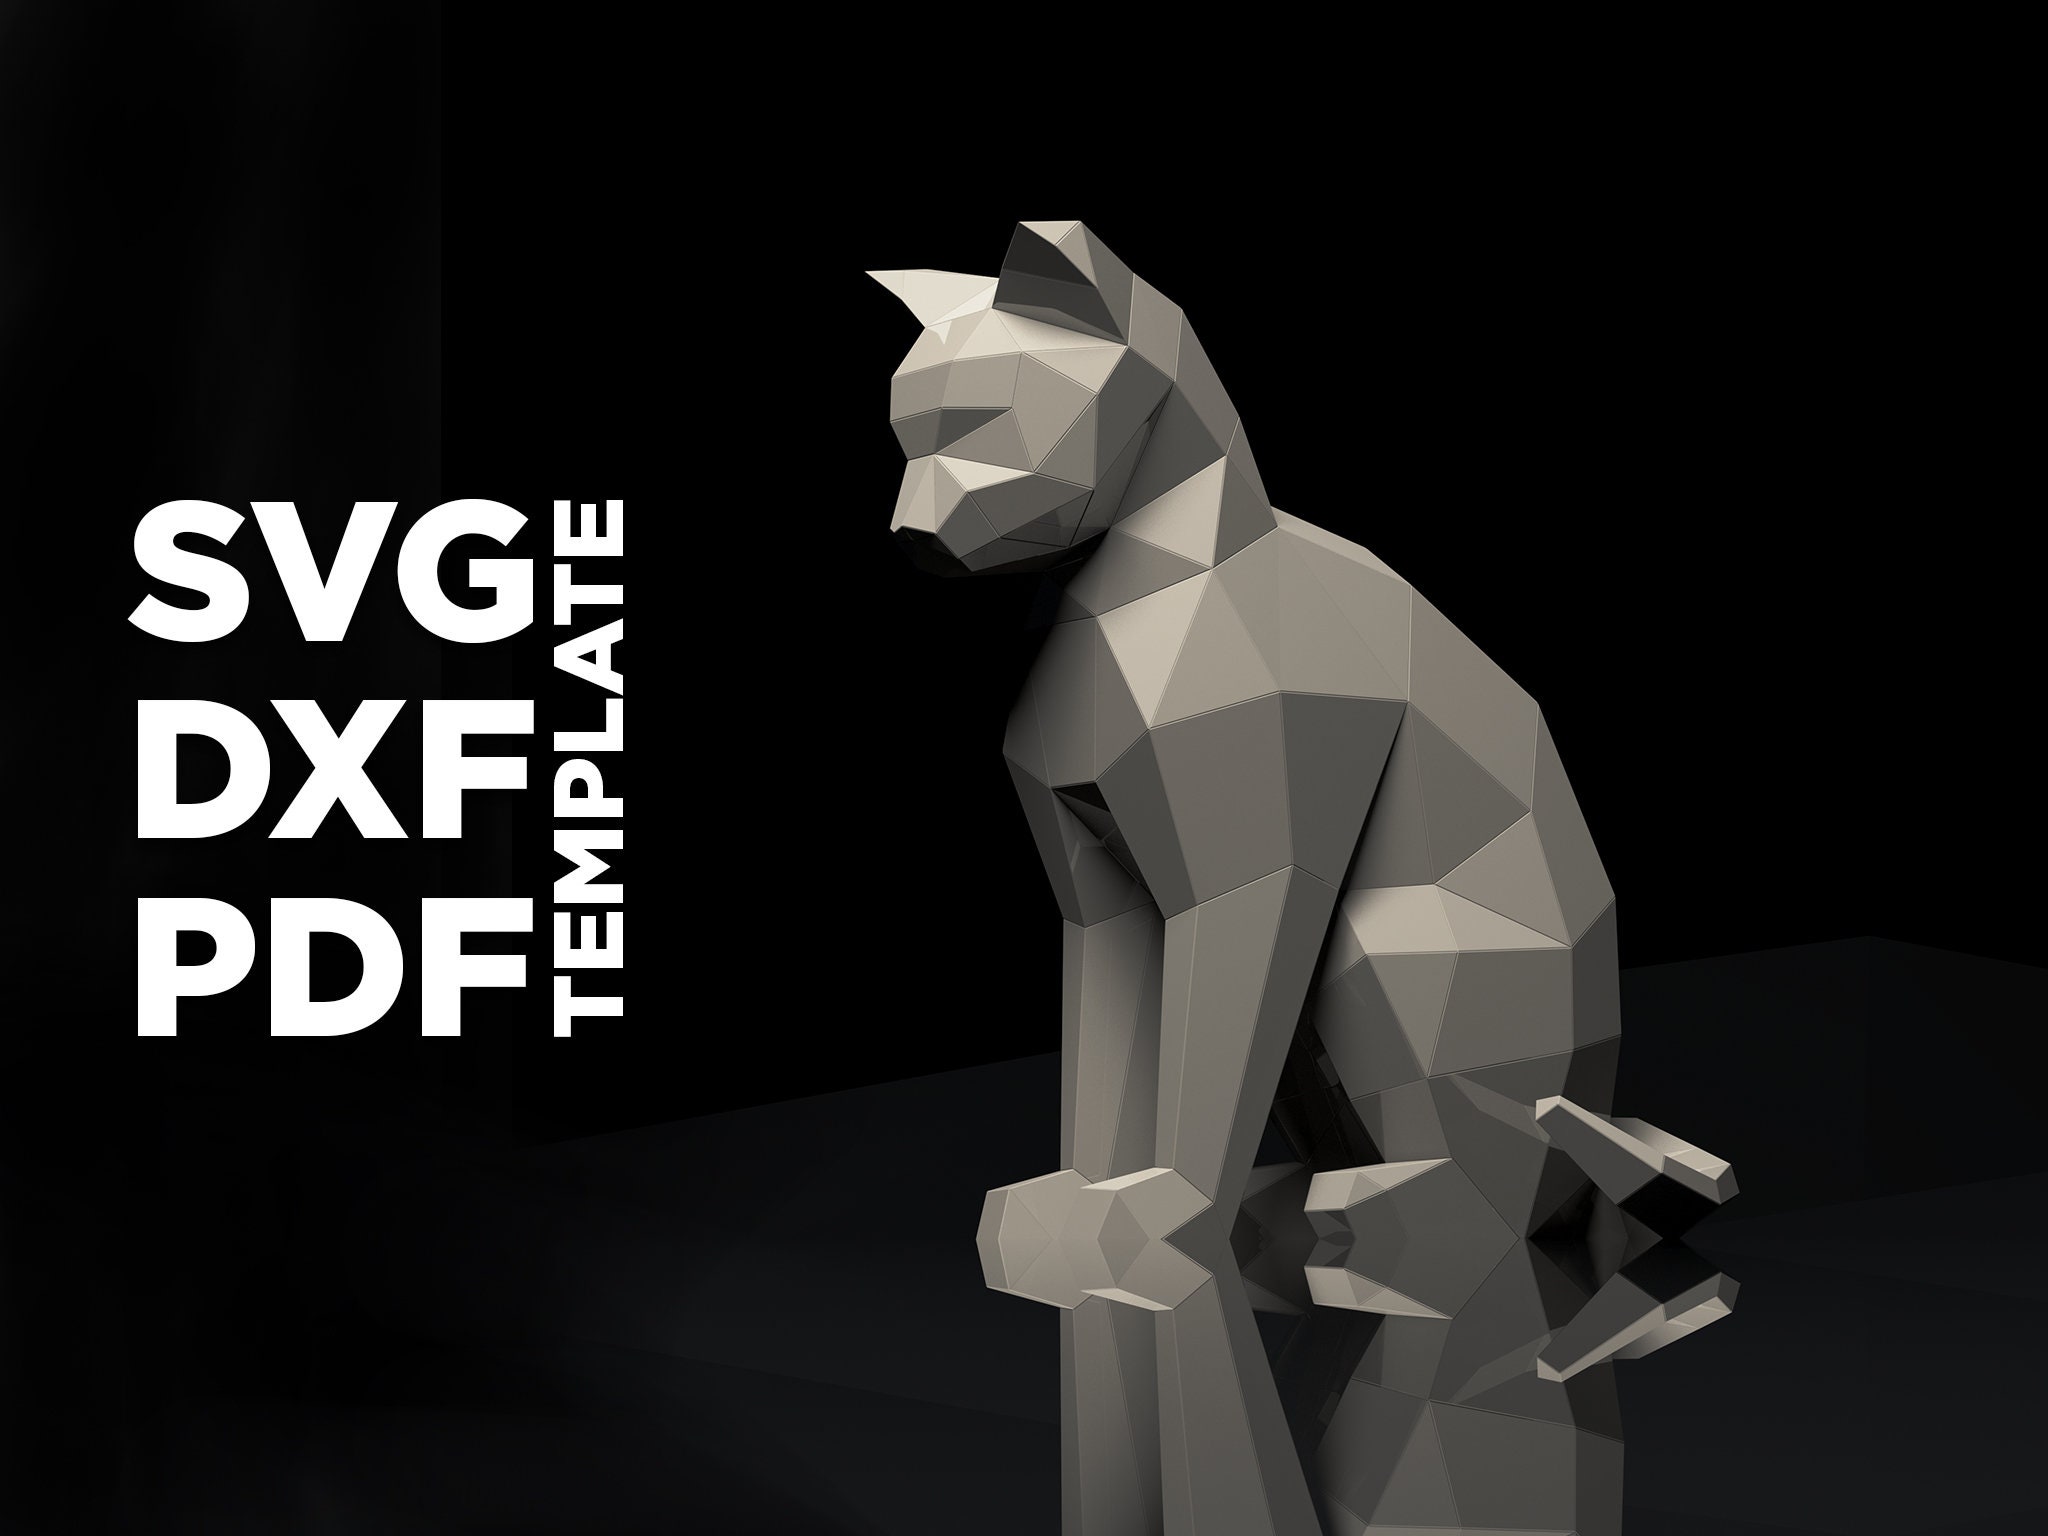 Cat Papercraft 3D SVG DXF Pdf DIY low poly paper crafts decor | Etsy